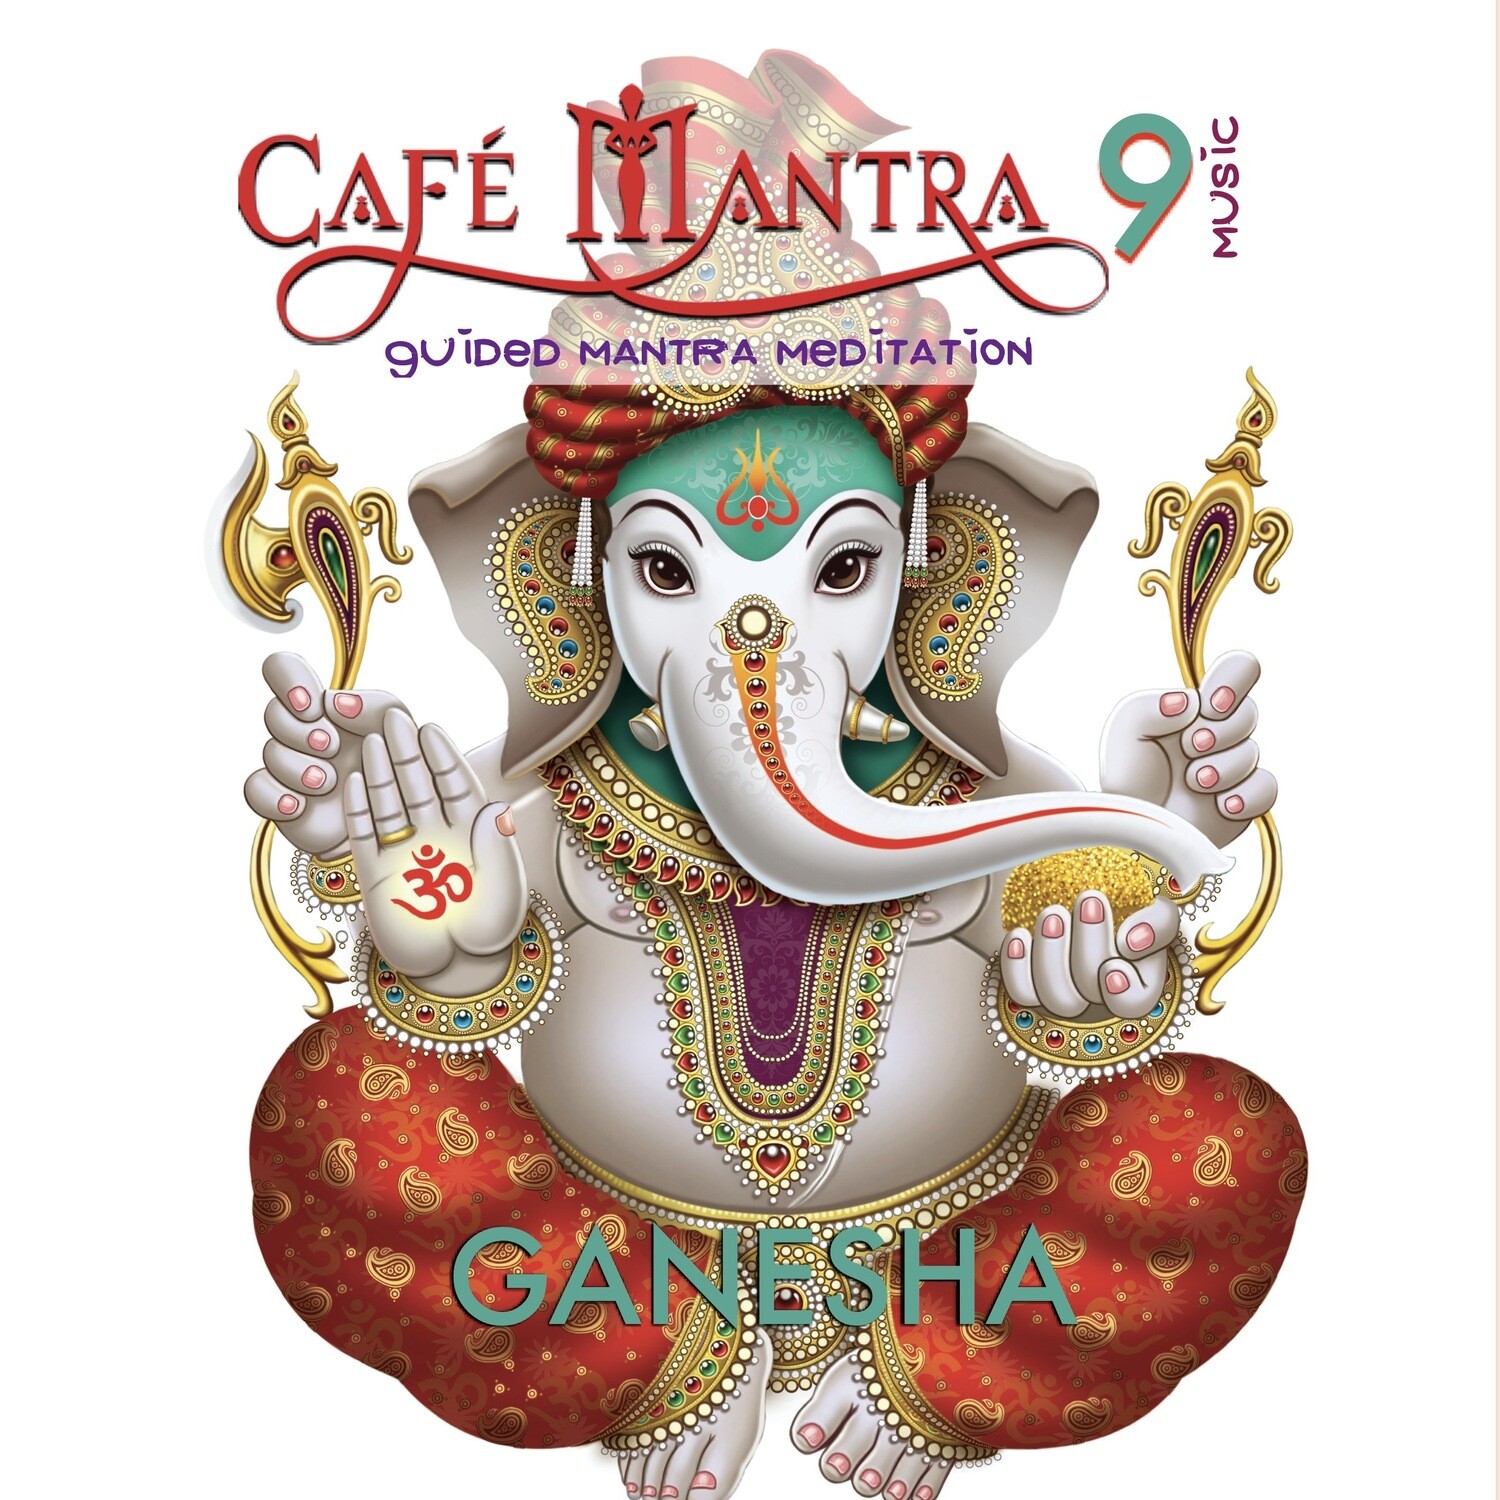 DOWNLOAD: Cafe Mantra Chant 3 Ganesha